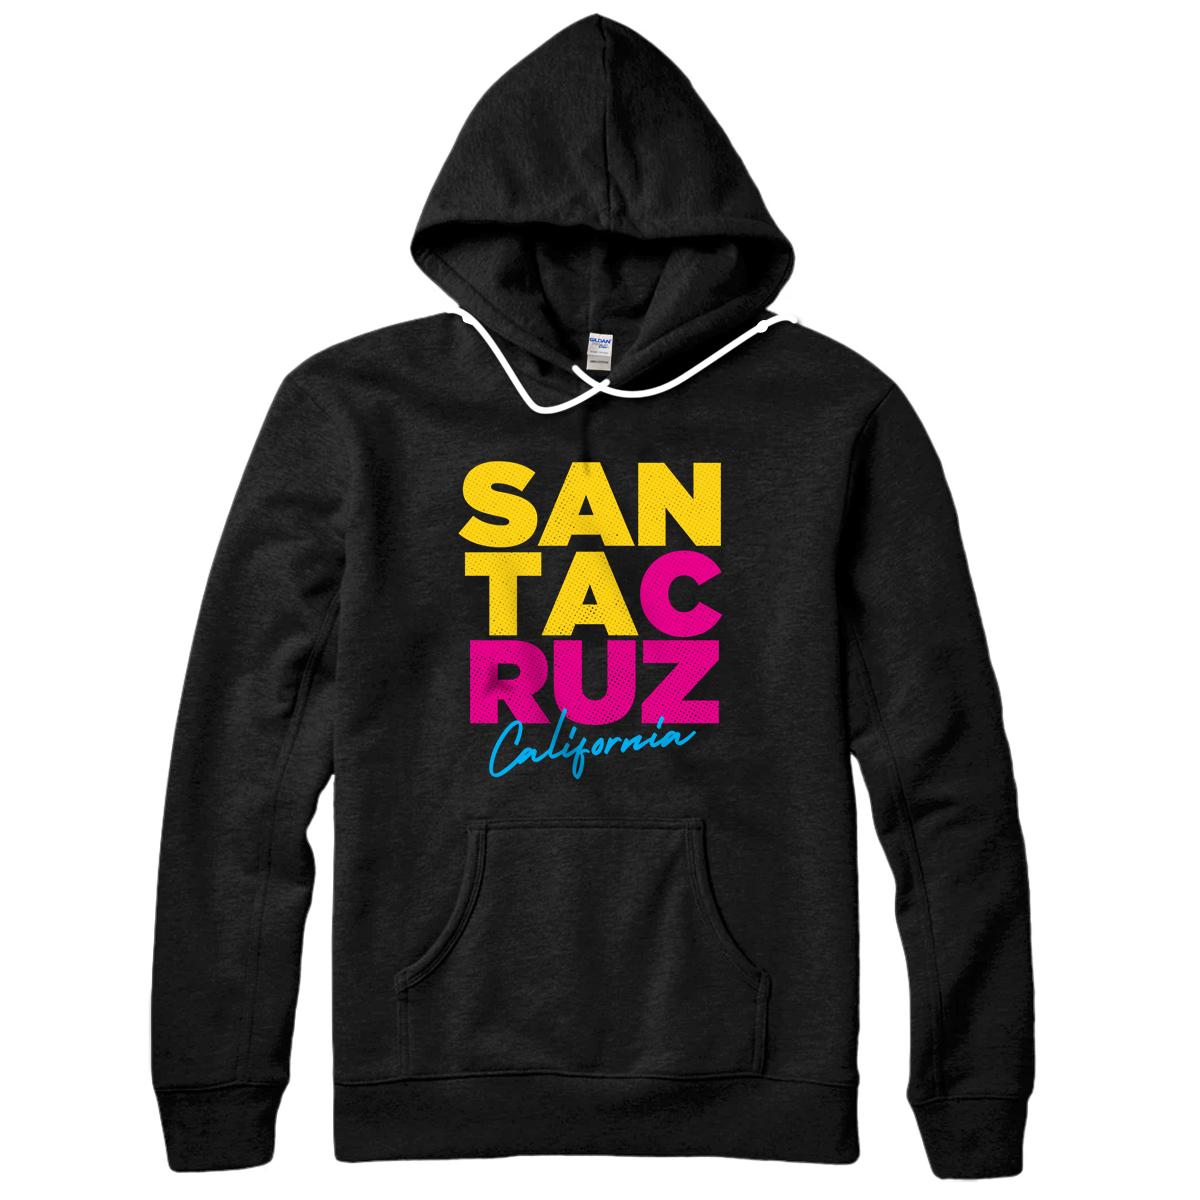 Personalized Santa Cruz California Graphic Pullover Hoodie